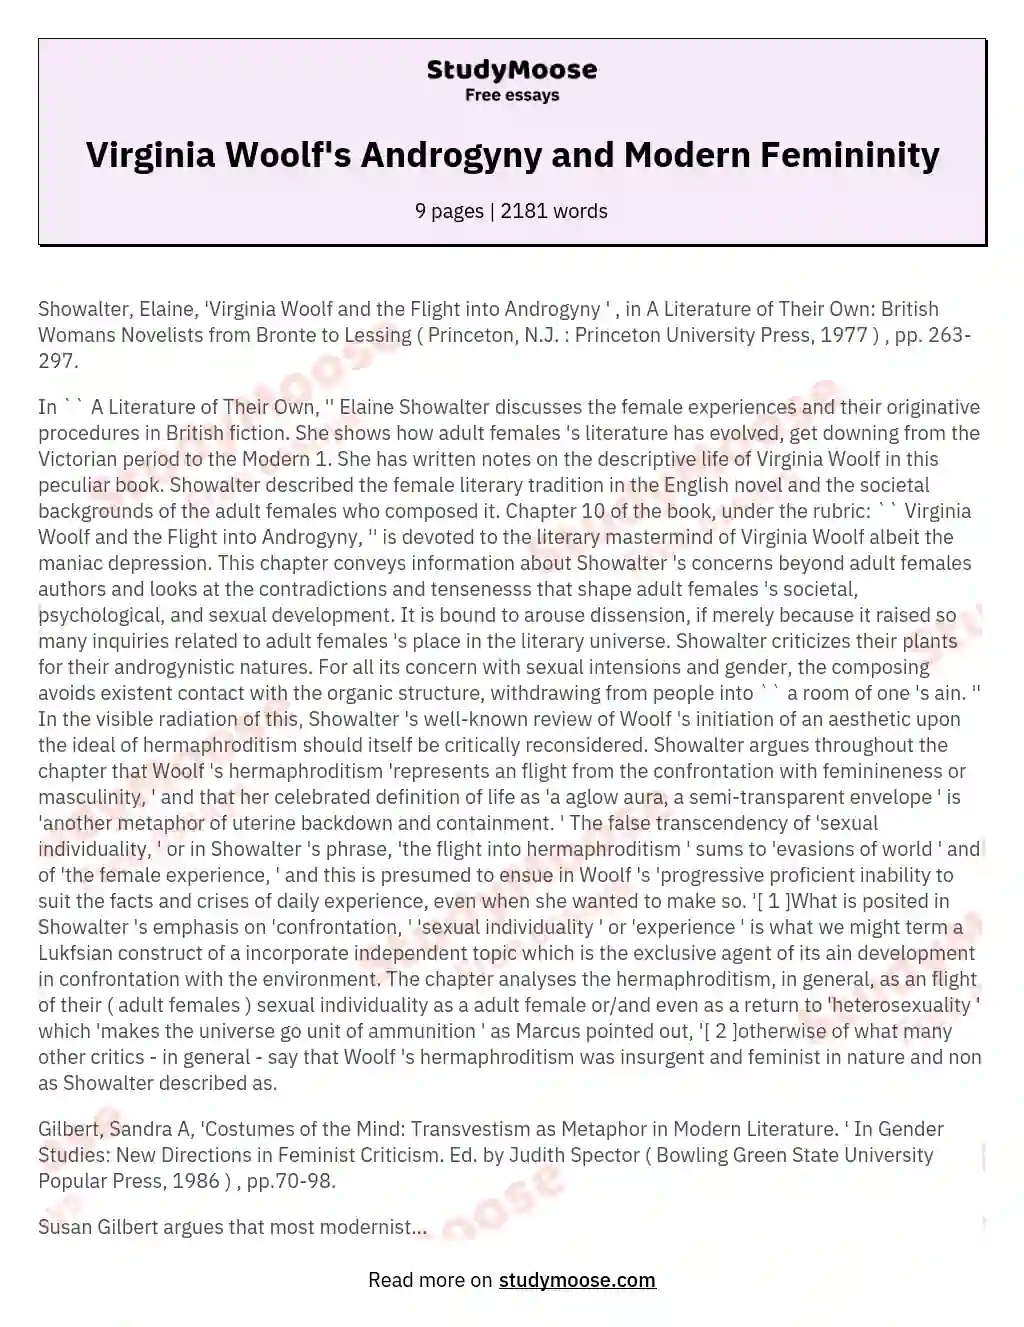 Virginia Woolf Femininity Modernity And Androgyny Critical English Literature Essay